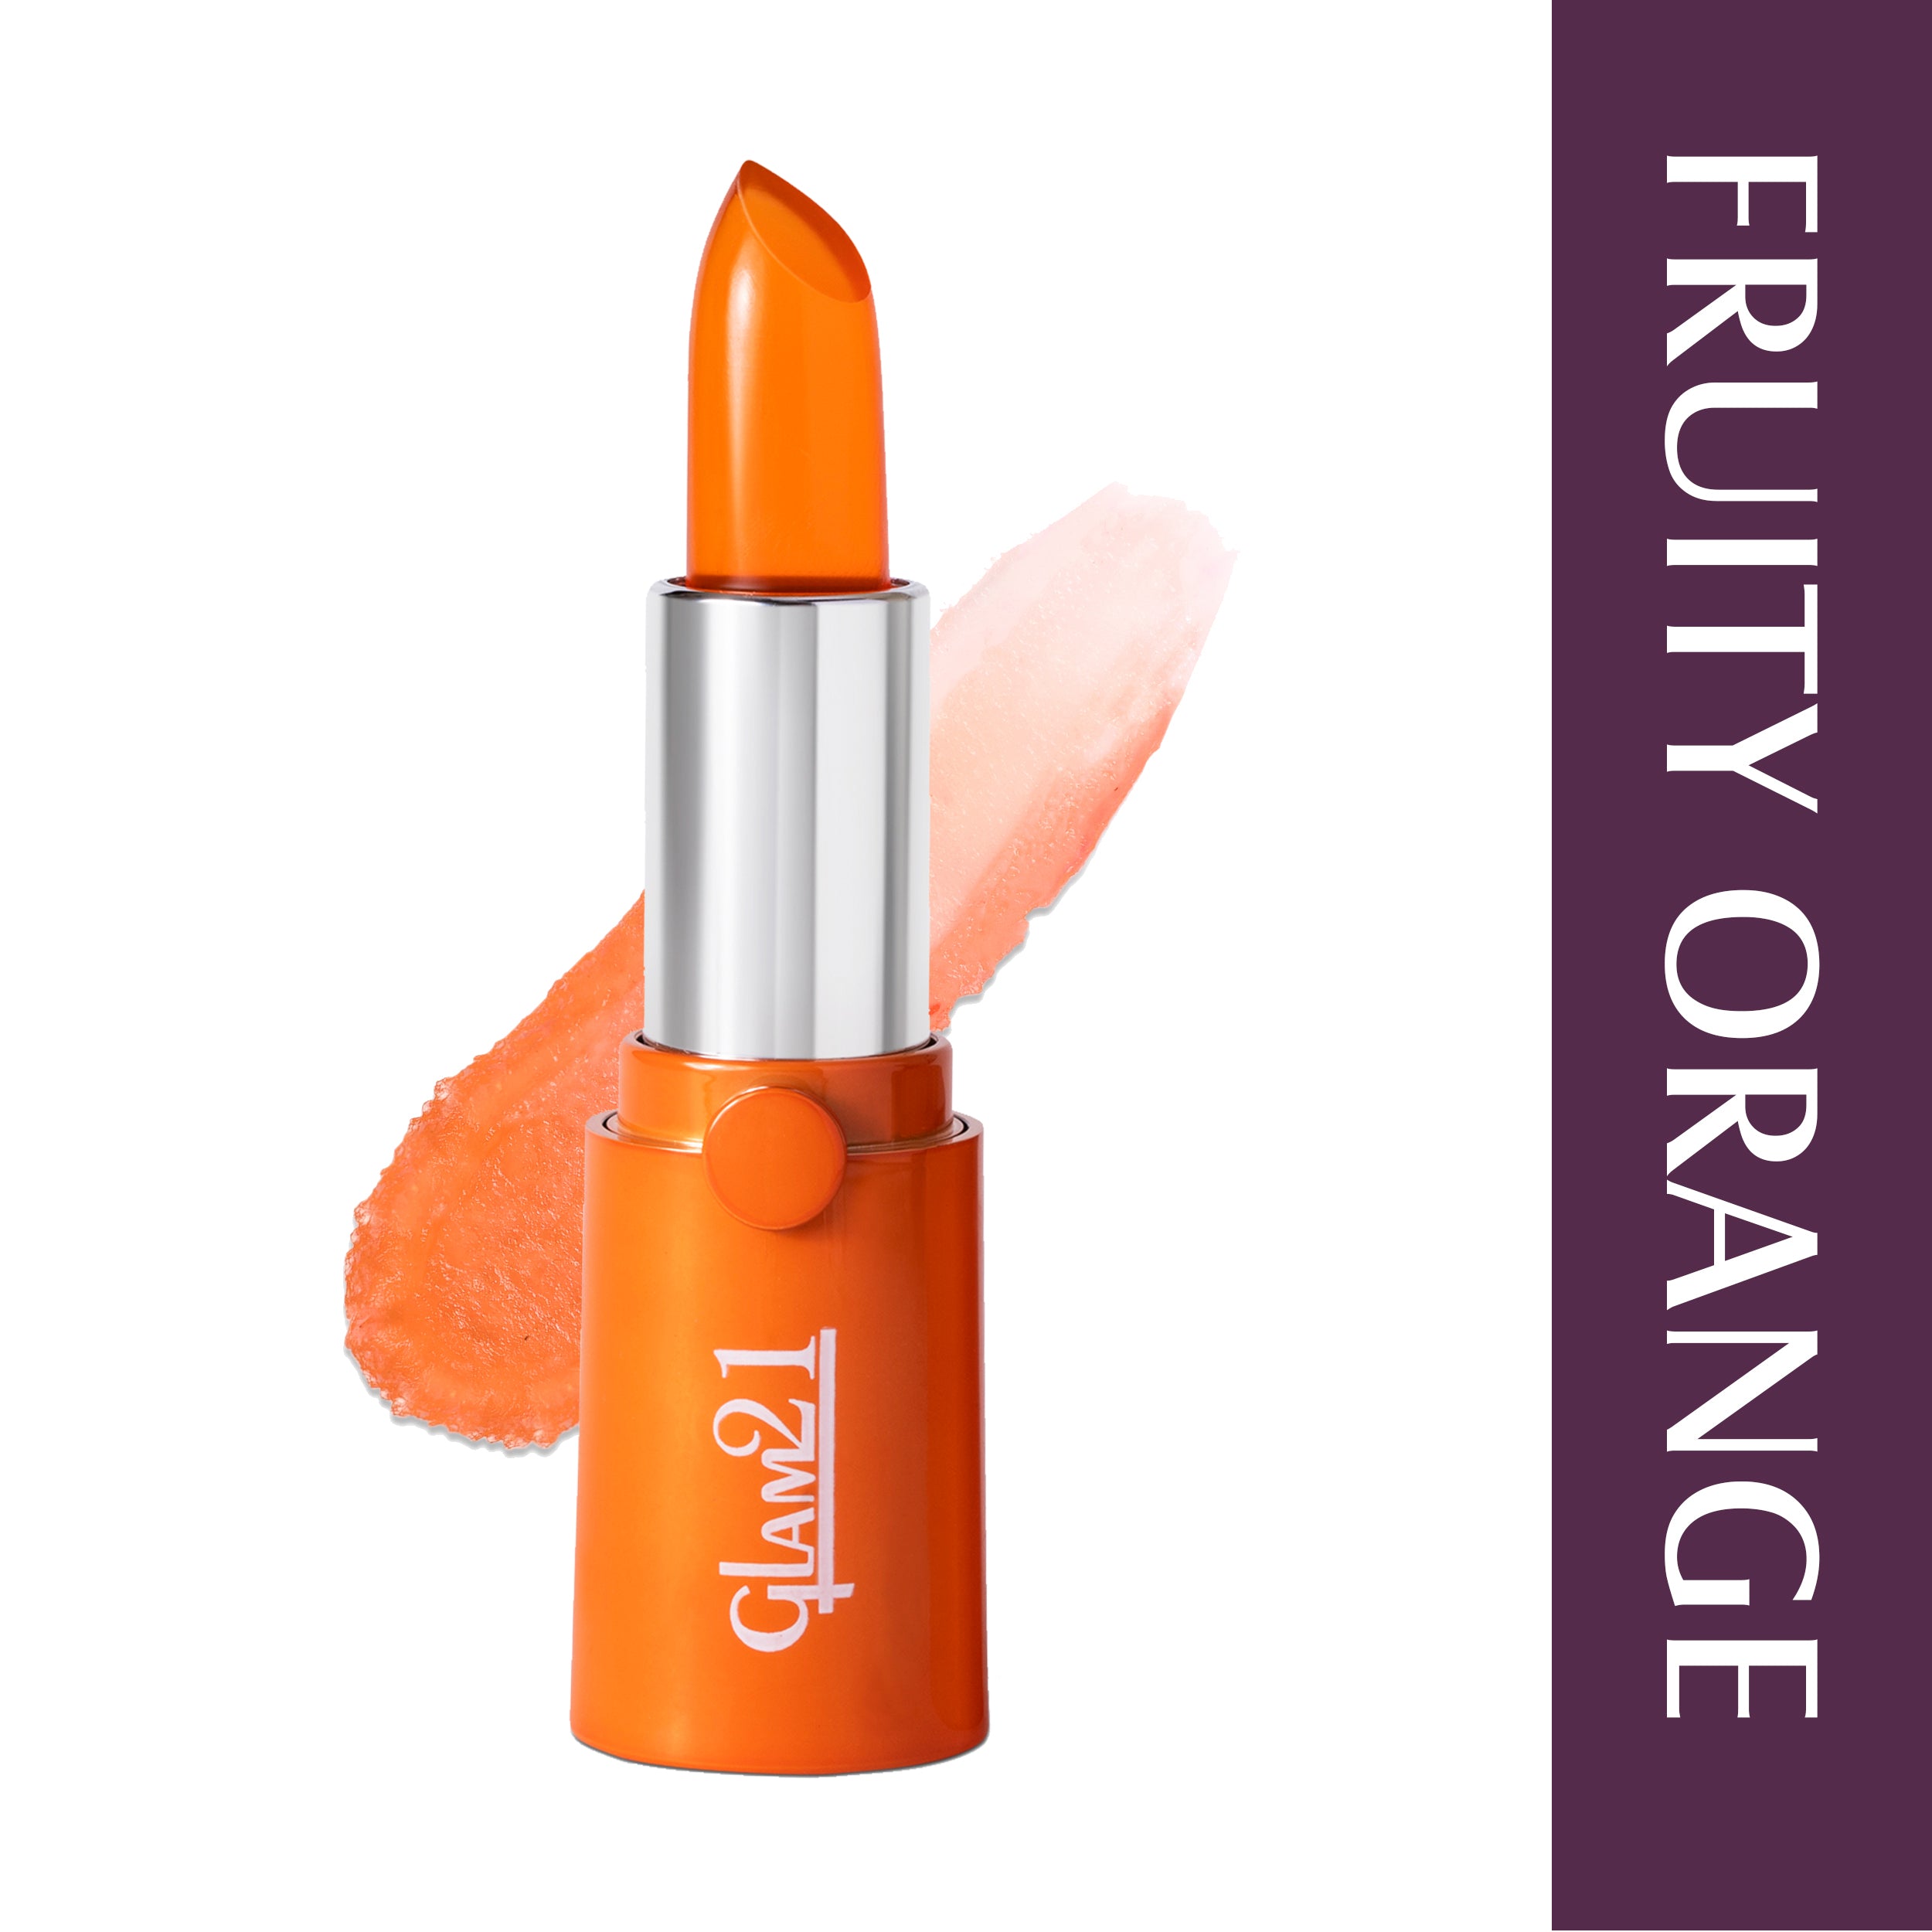 Glam21 Gel Based Ultra-Moisturizing Lightweighted Lipstick with Glossy Shine Formula (Fruity Orange, 3.6 g)